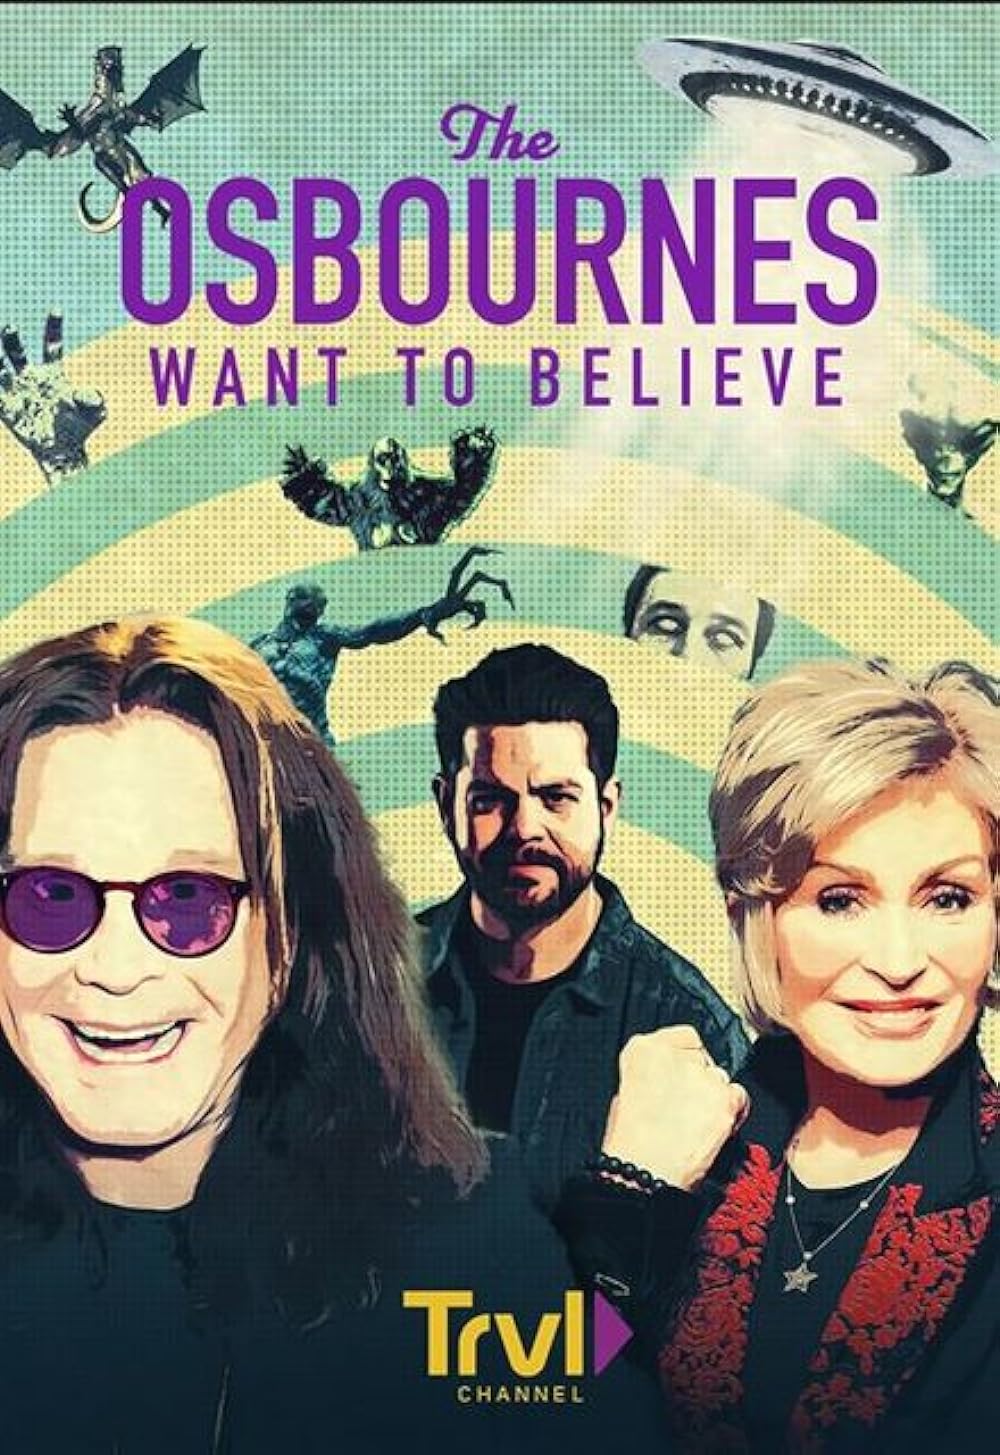 The Osbournes Want to Believe